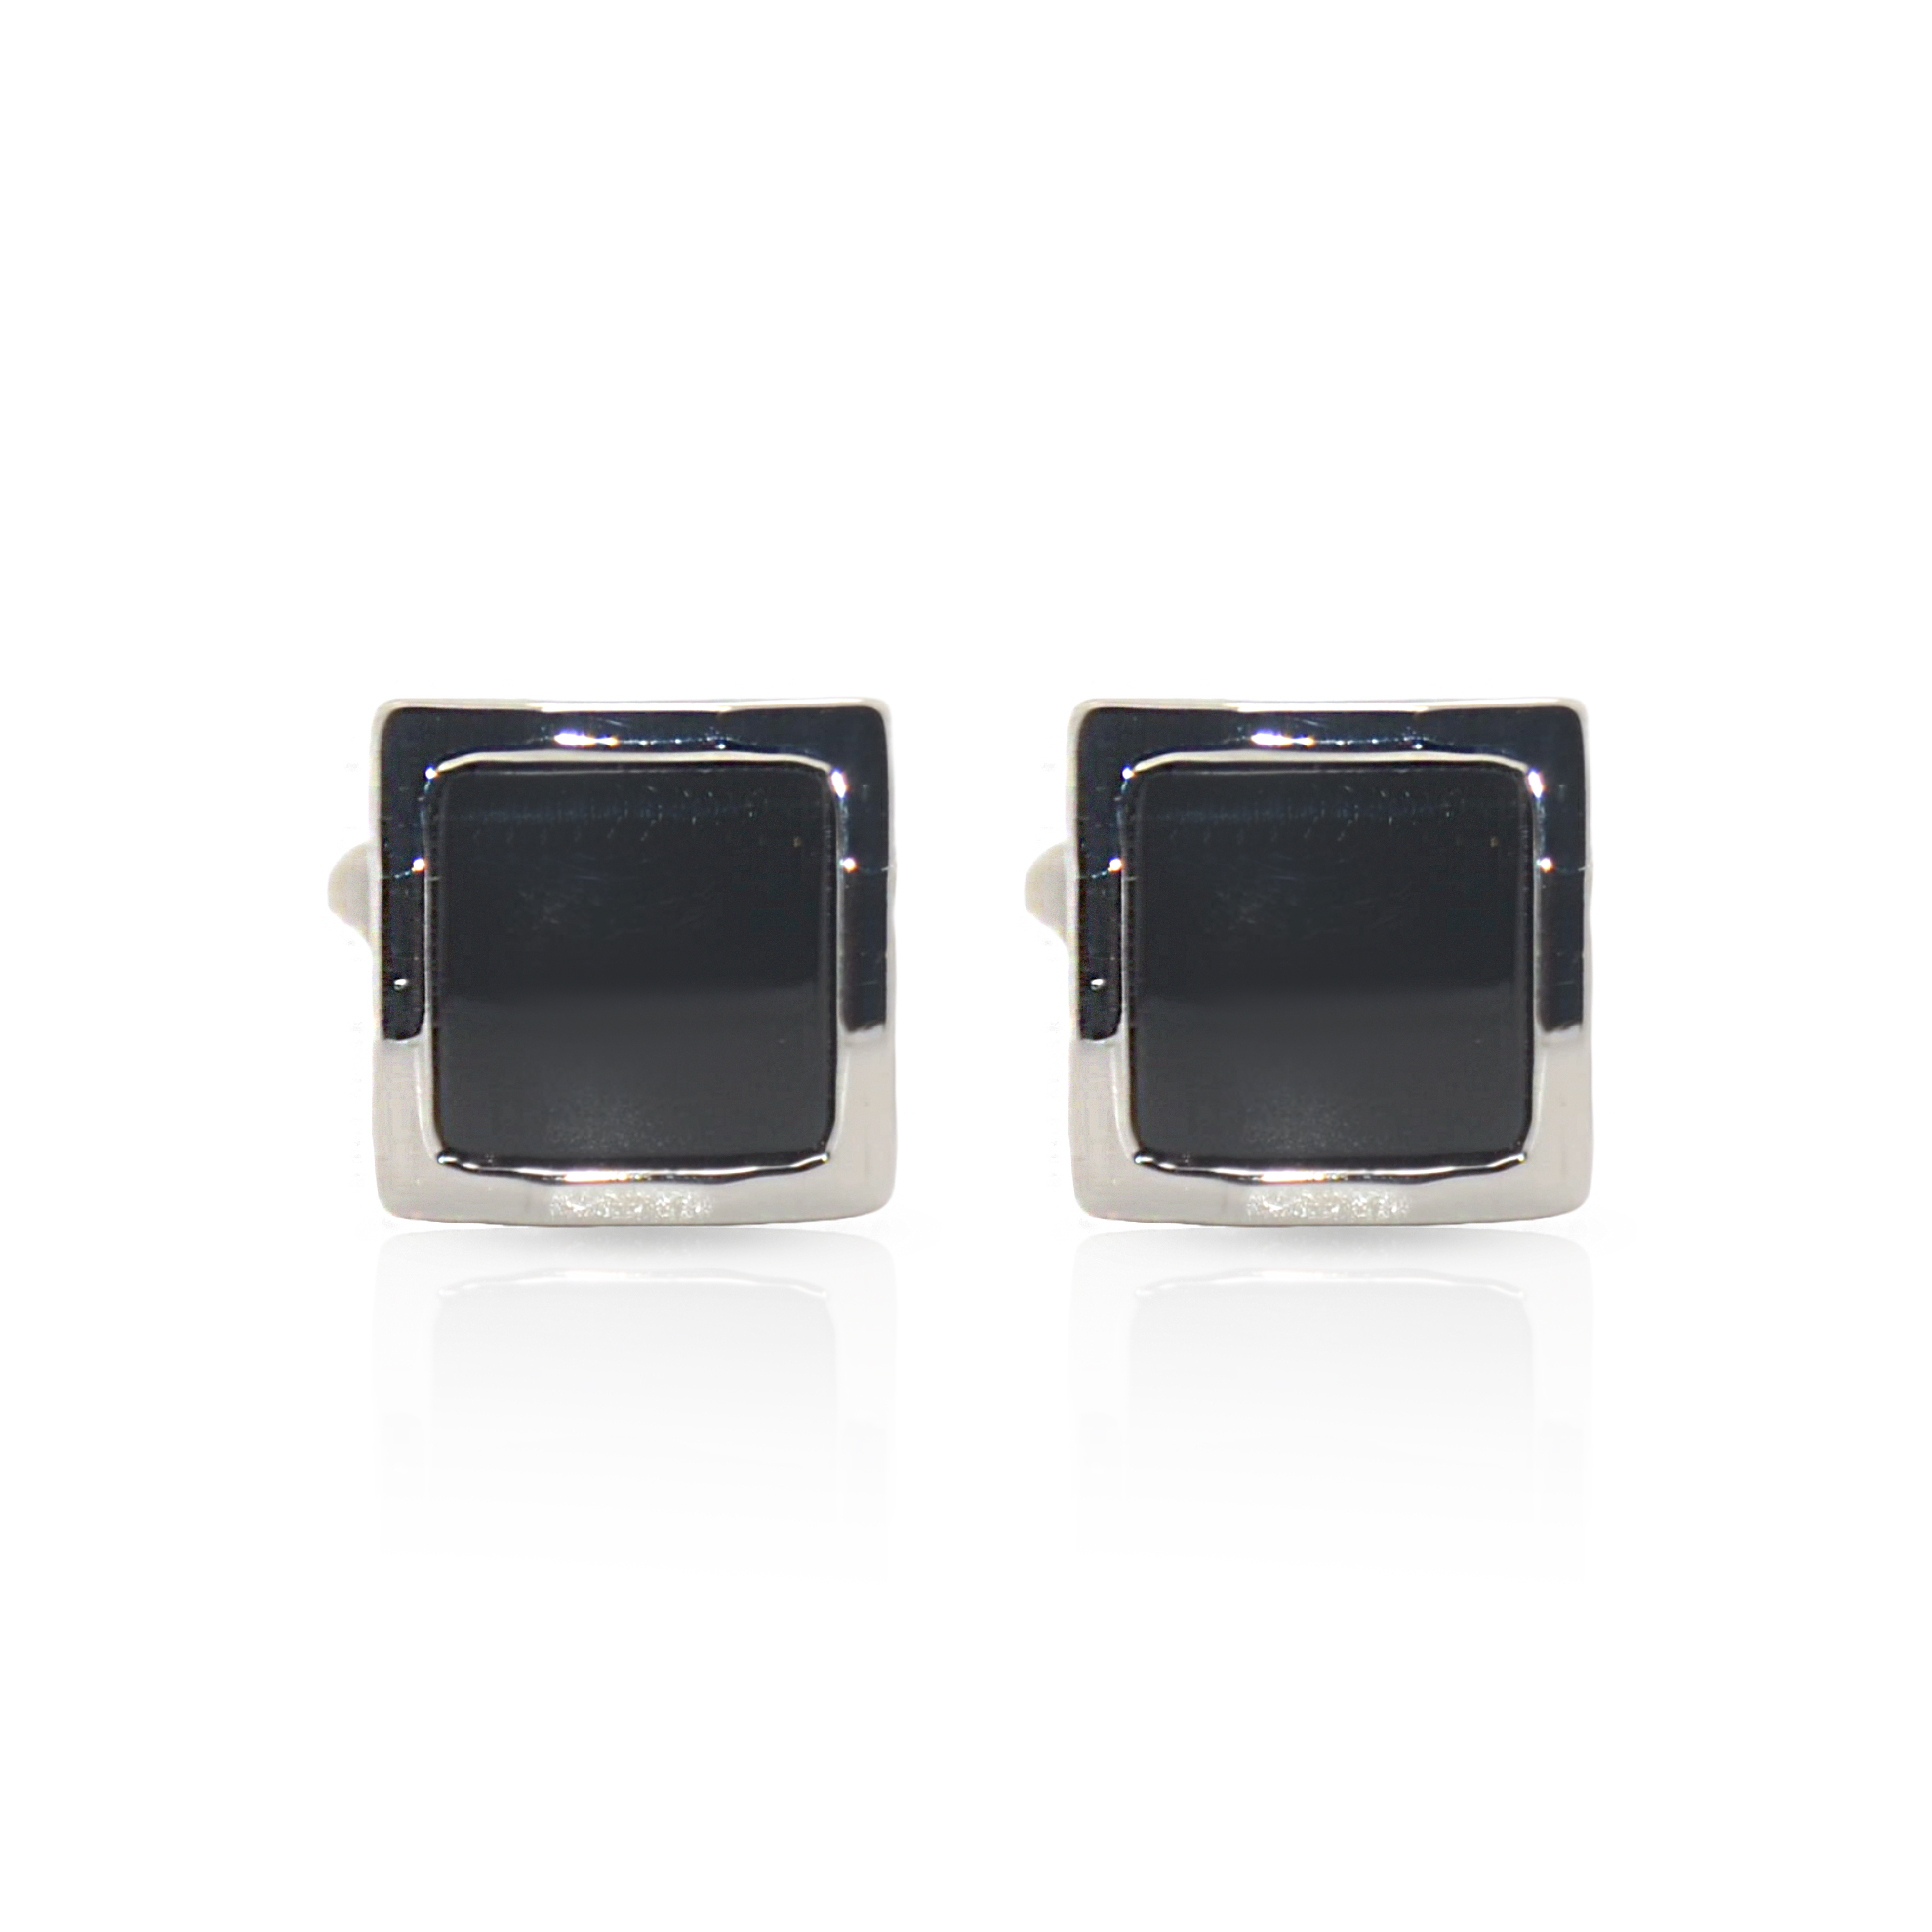 Cufflers Novelty Black Box Cufflinks with Free Gift Box – CU-2028 – Black